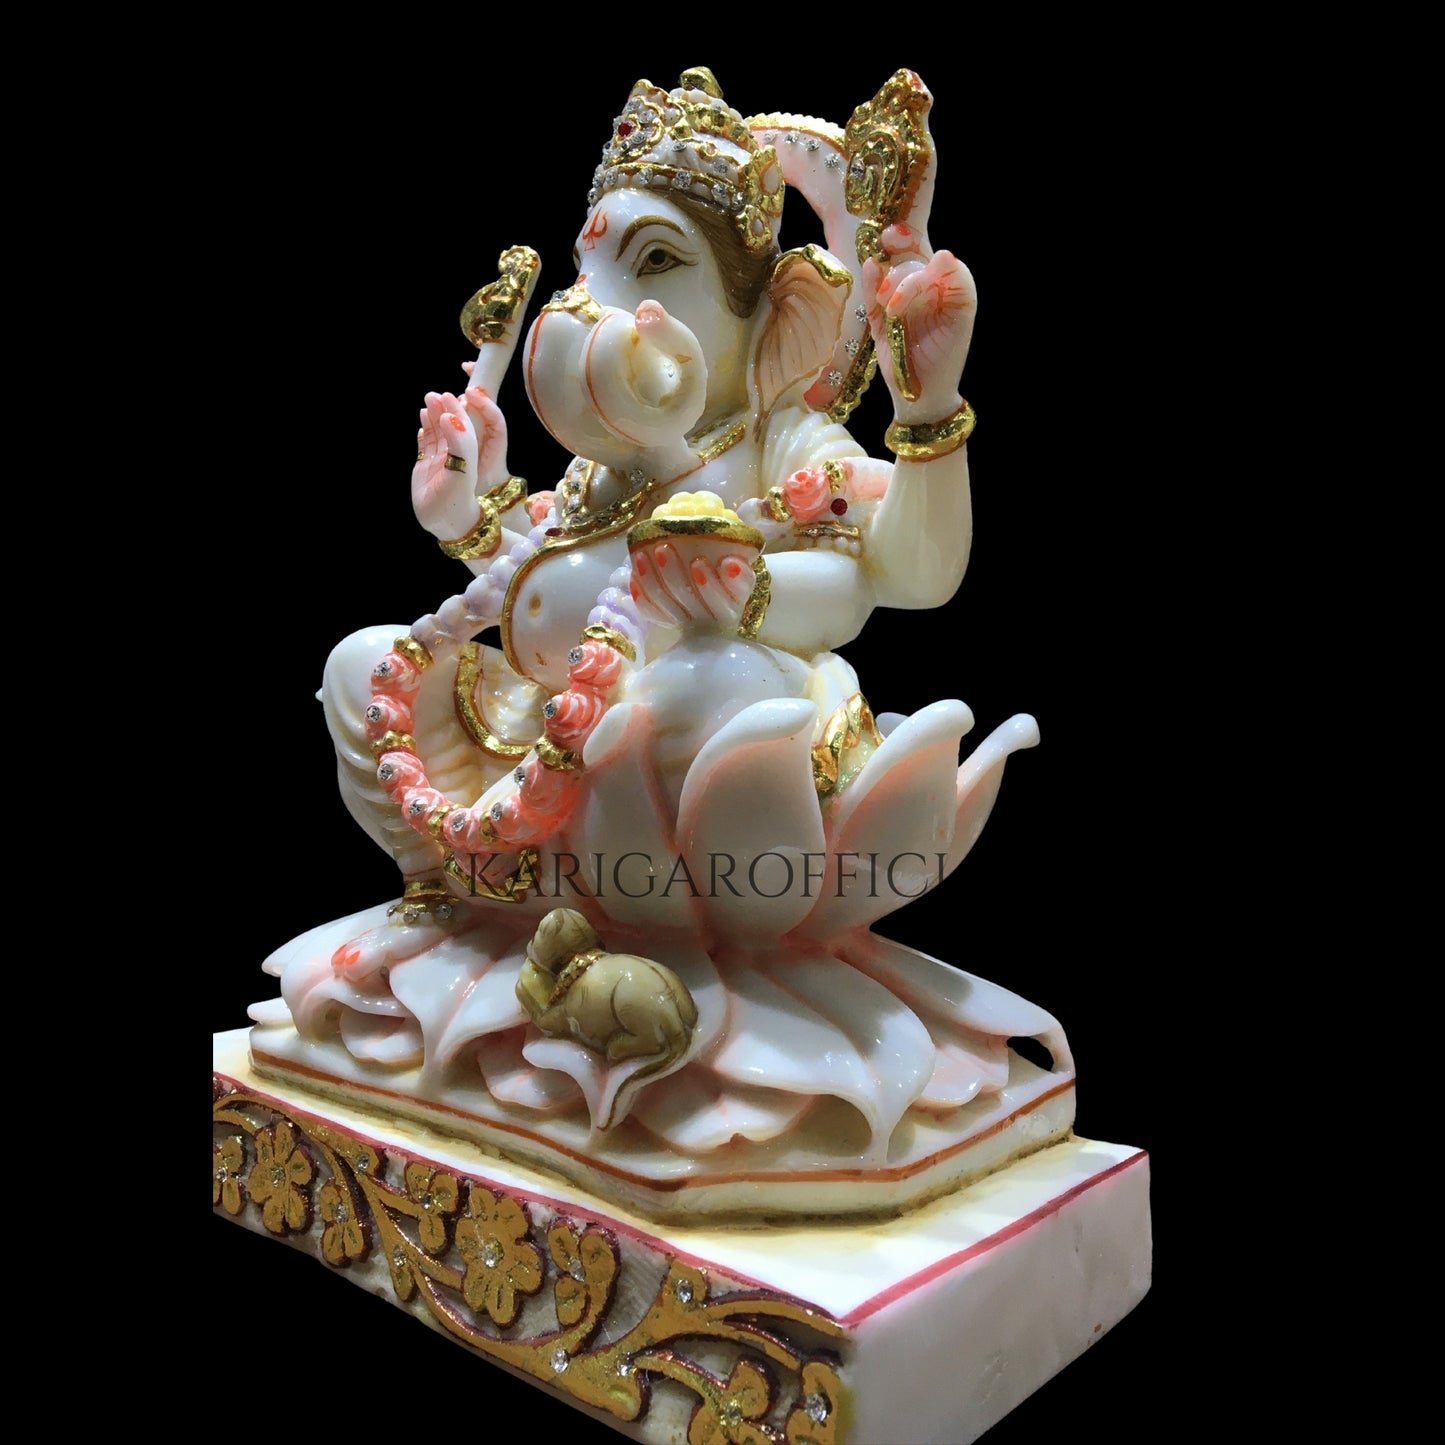 Ganesha Murti Statue Sitting on lotus flower - Large 12 inches Stone Jewelry Studded Ganpati Figurine - Marble Ganapati Idol - Vinayak Deity - Large Elephant God Figurine Housewarming Gifts Sculpture